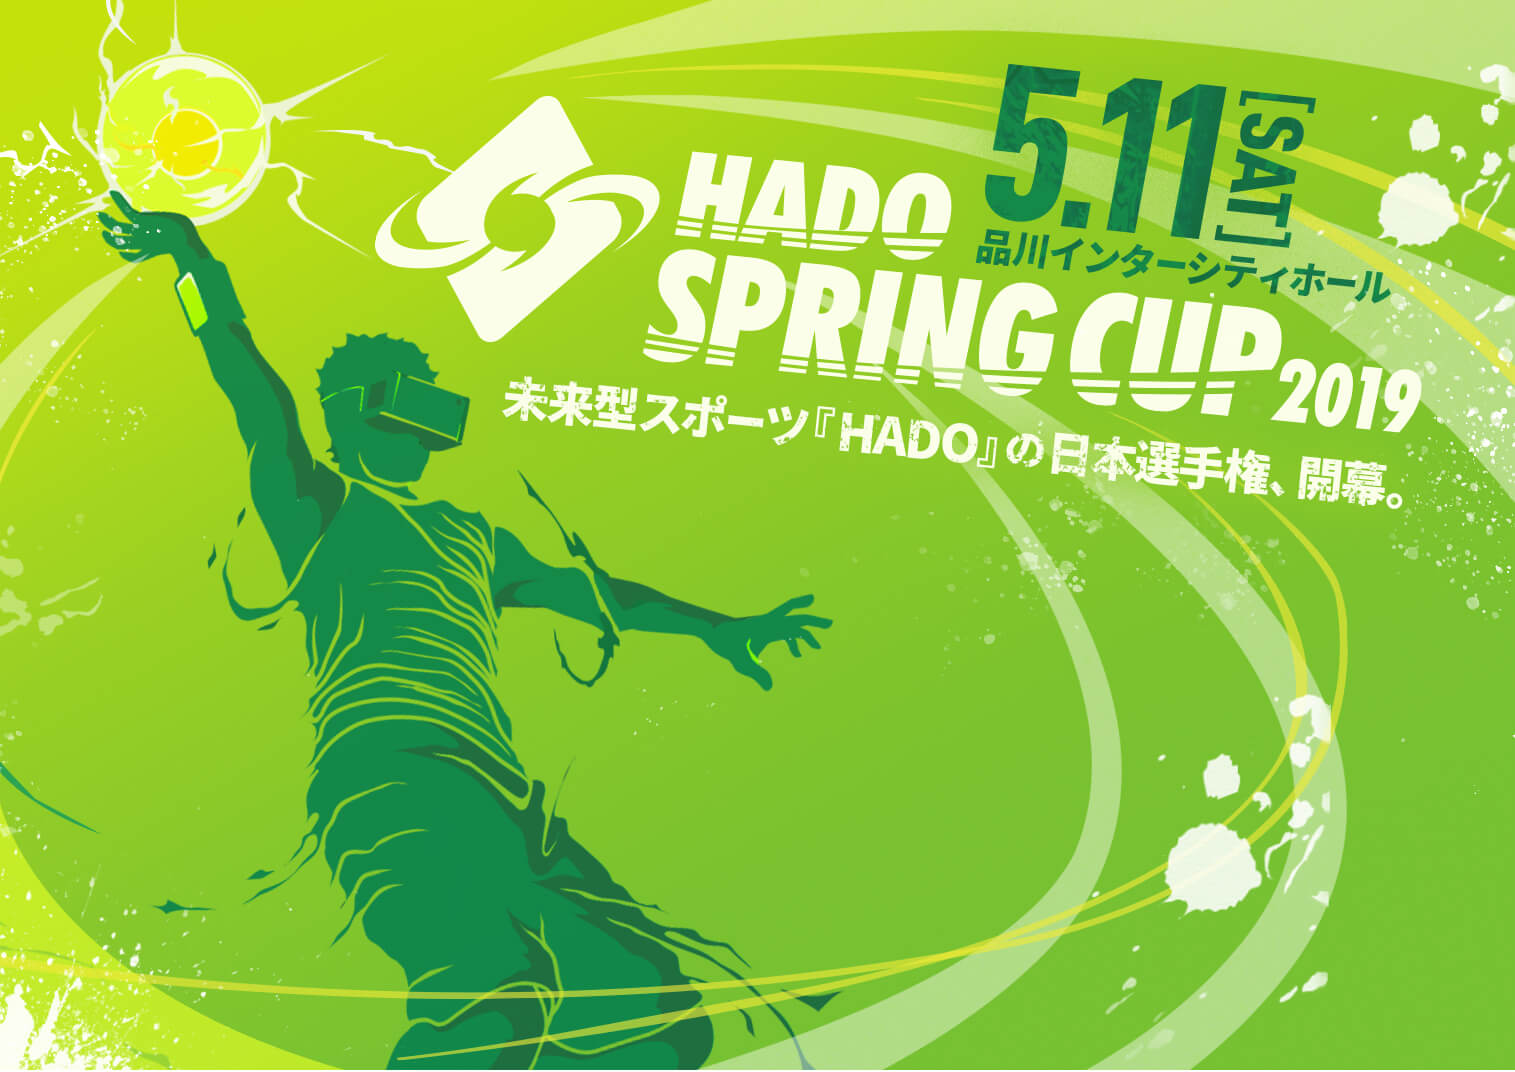 HADO SPRING CUP 2019season 5.11(SAT)品川インターシティホール